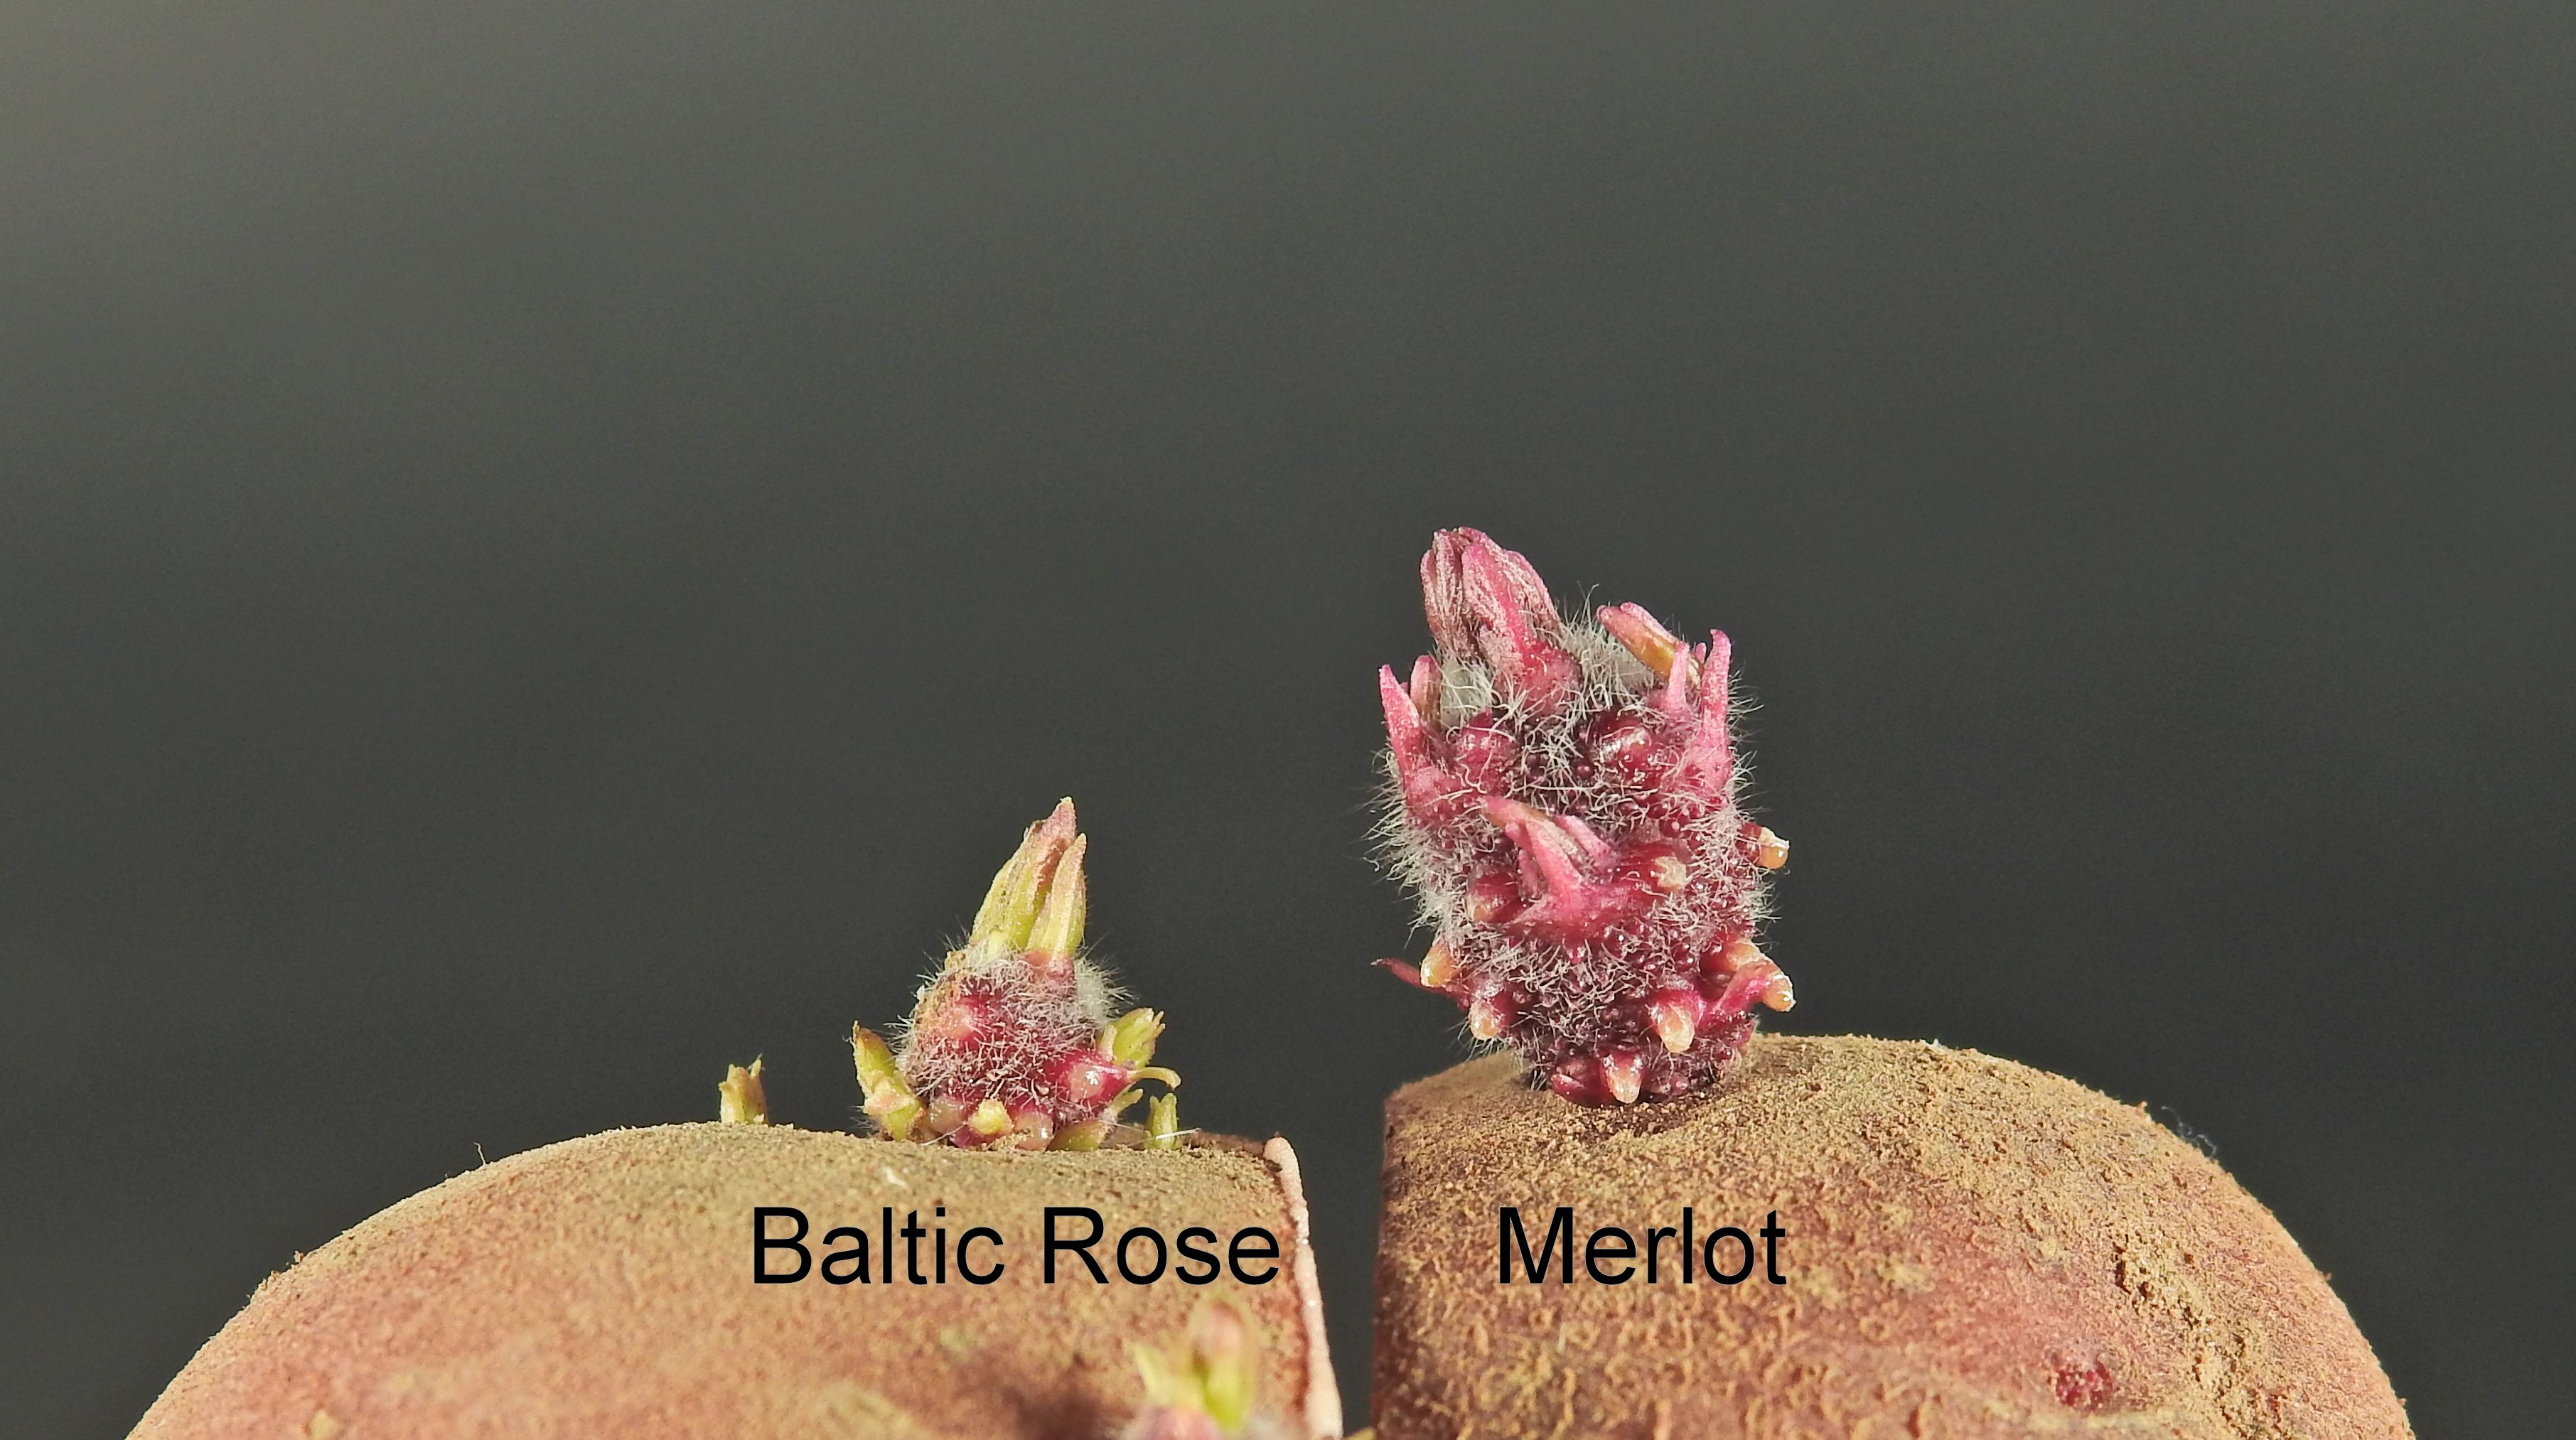 Baltic Rose